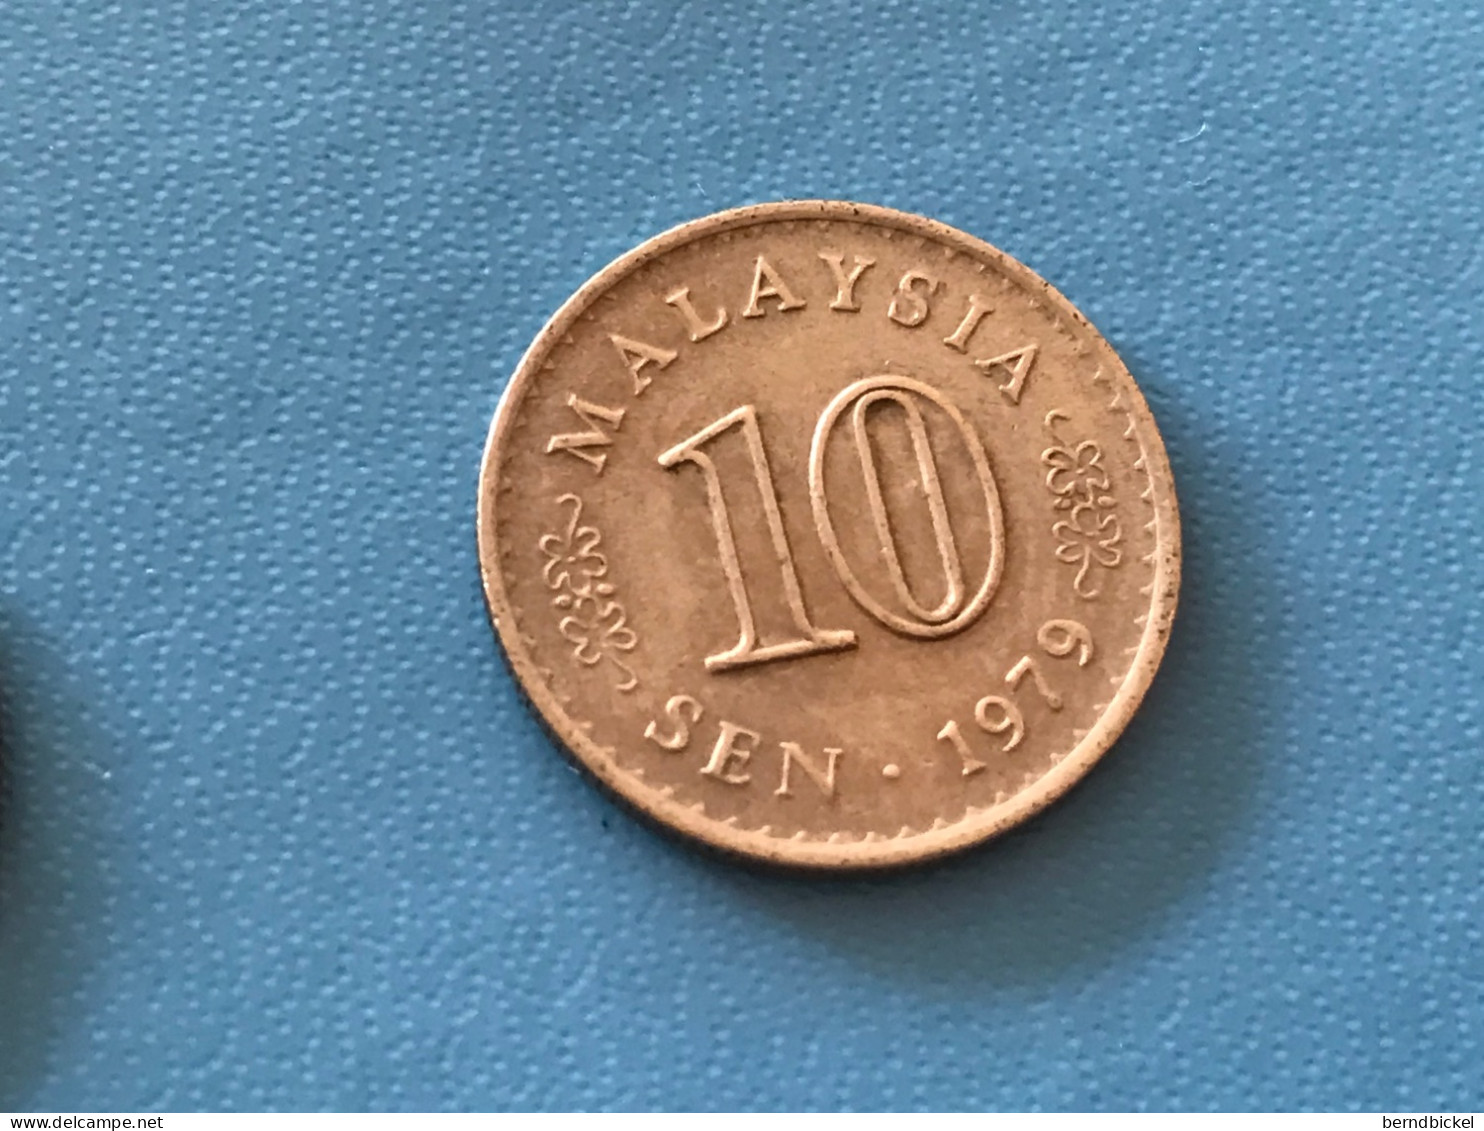 Münze Münzen Umlaufmünze Malaysia 10 Sen 1979 - Malaysie